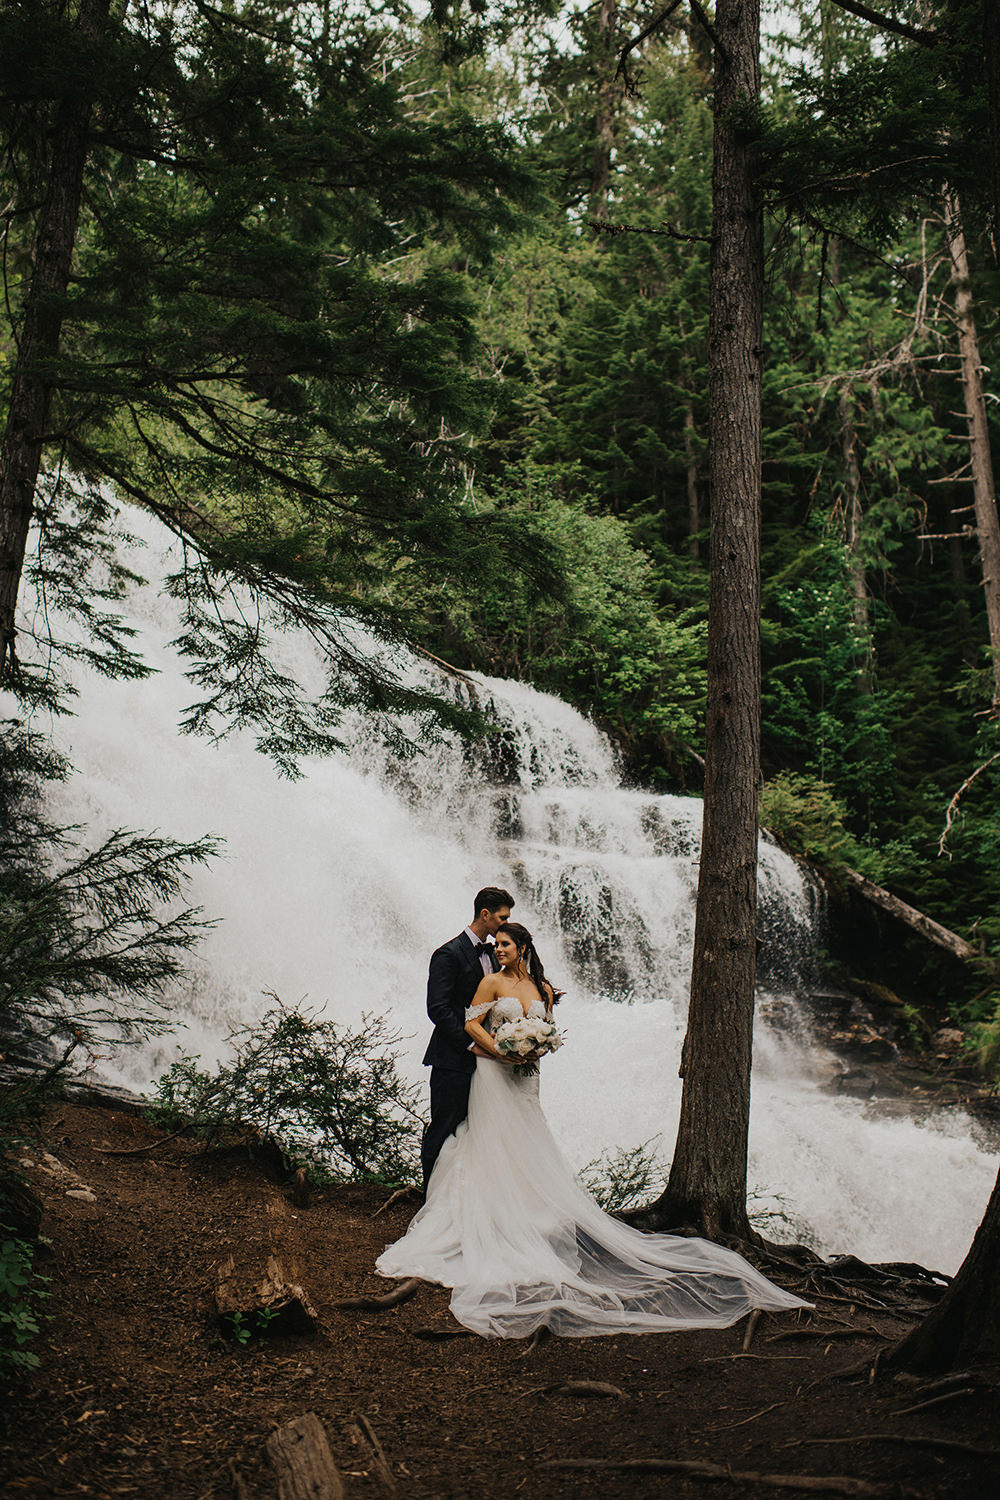 Stunning Revelstoke wedding photo at Moses Falls